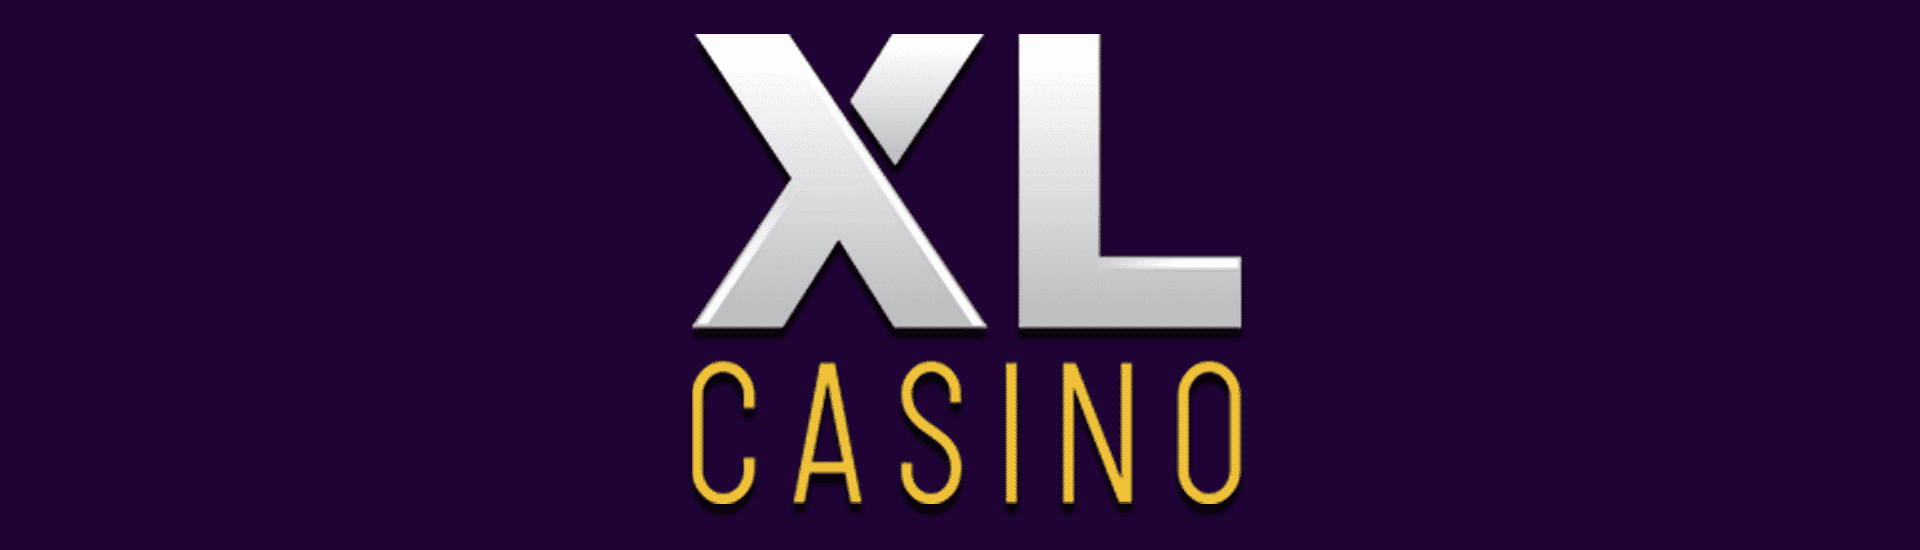 XL Casino Featured Image